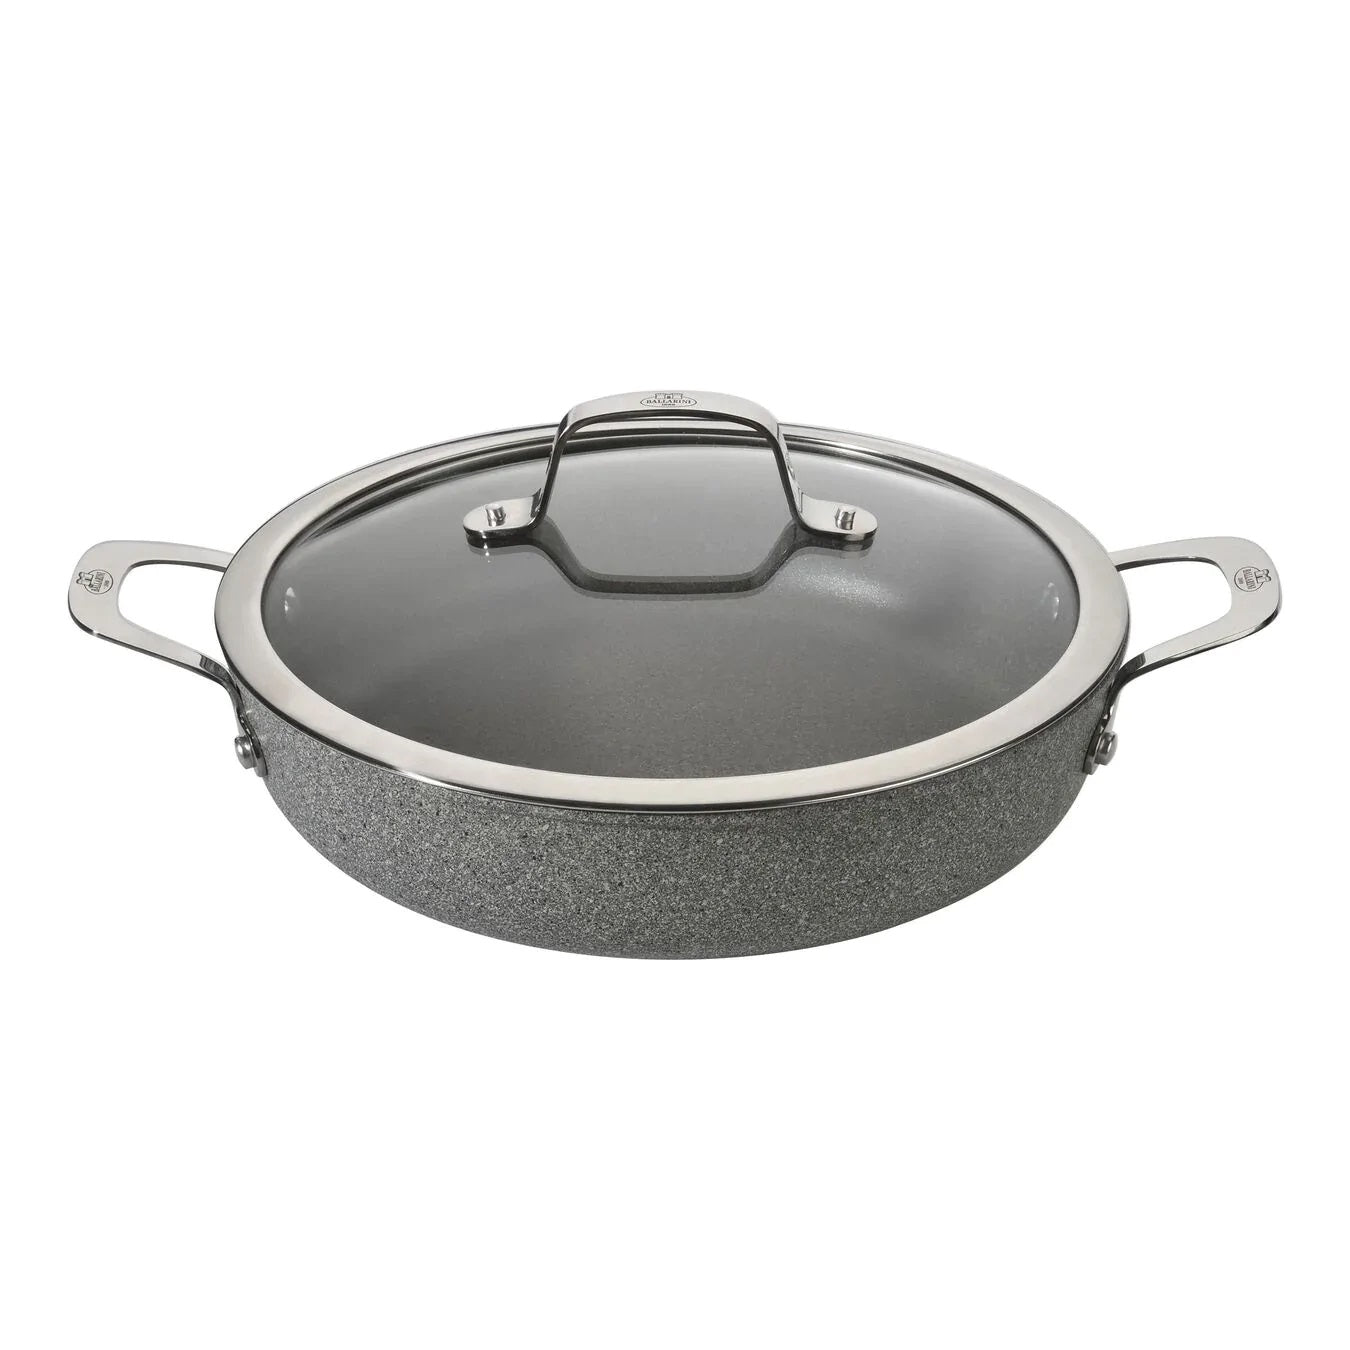 Ballarini Non-stick aluminum pan with handles and lid, Saline line, 28 cm